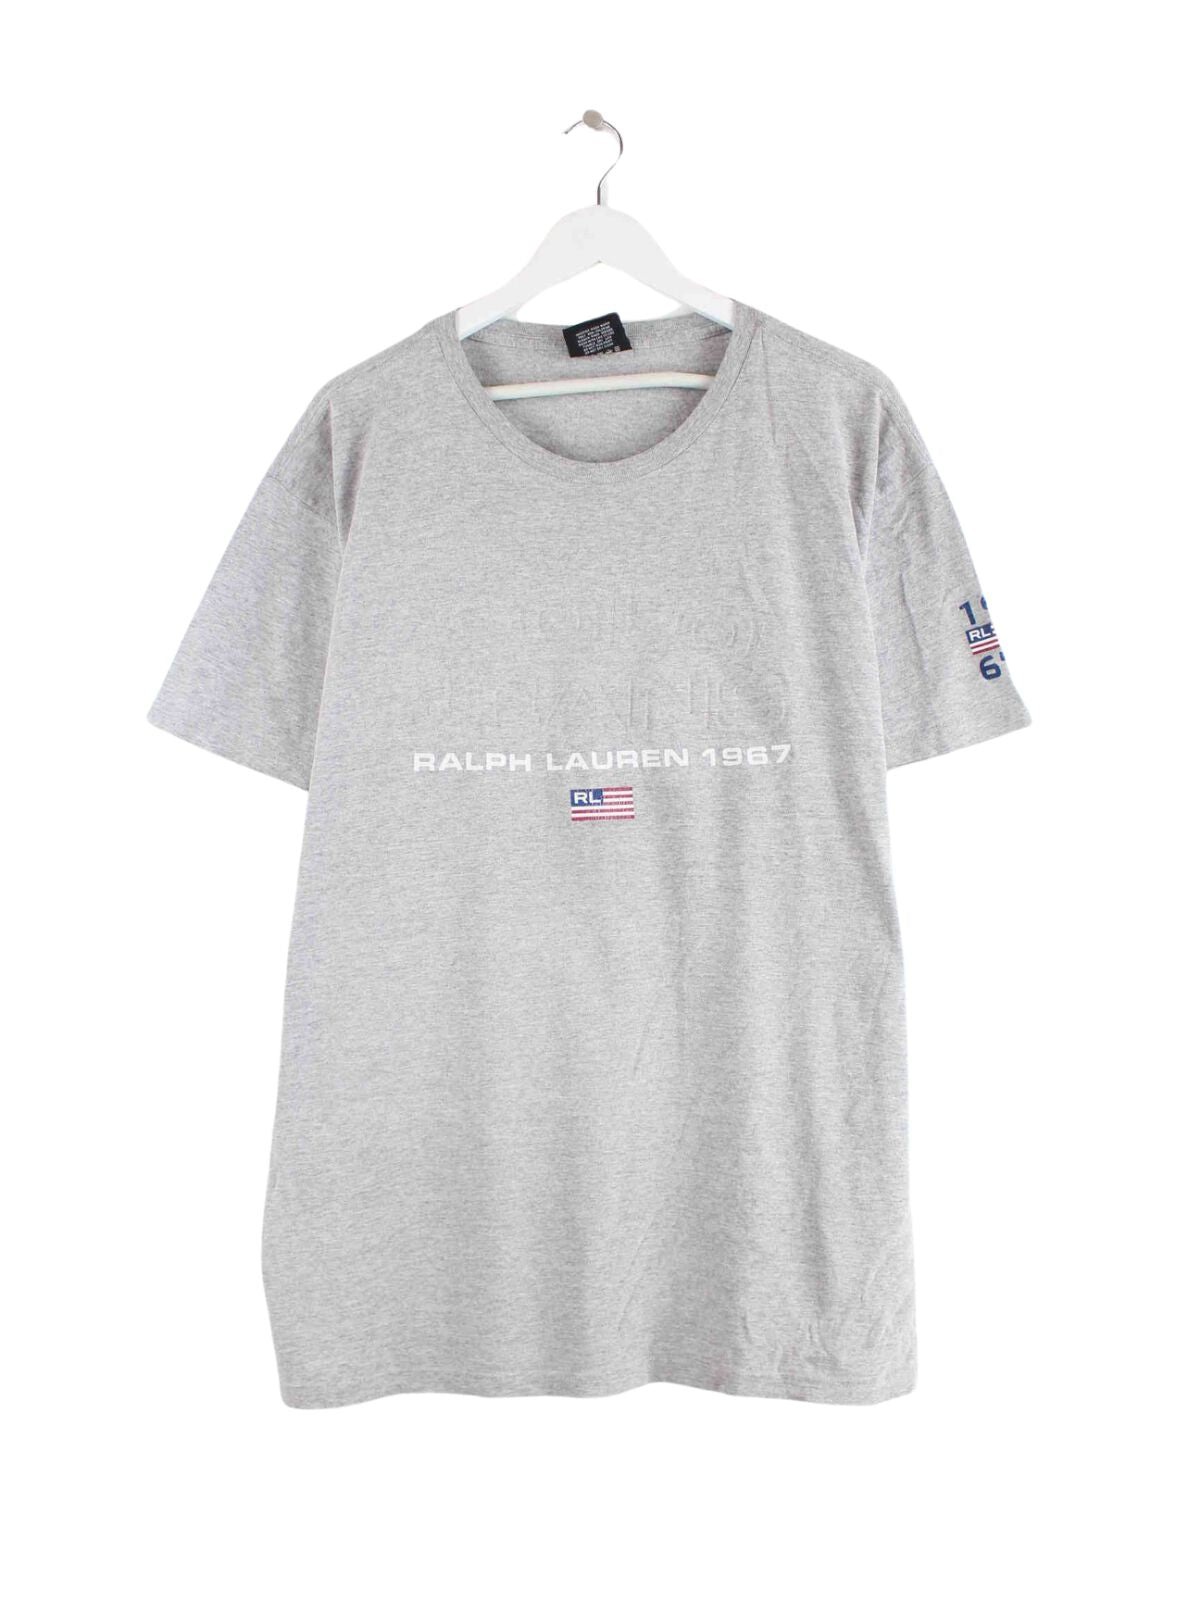 Ralph Lauren Embroidered T-Shirt Grau XL (front image)